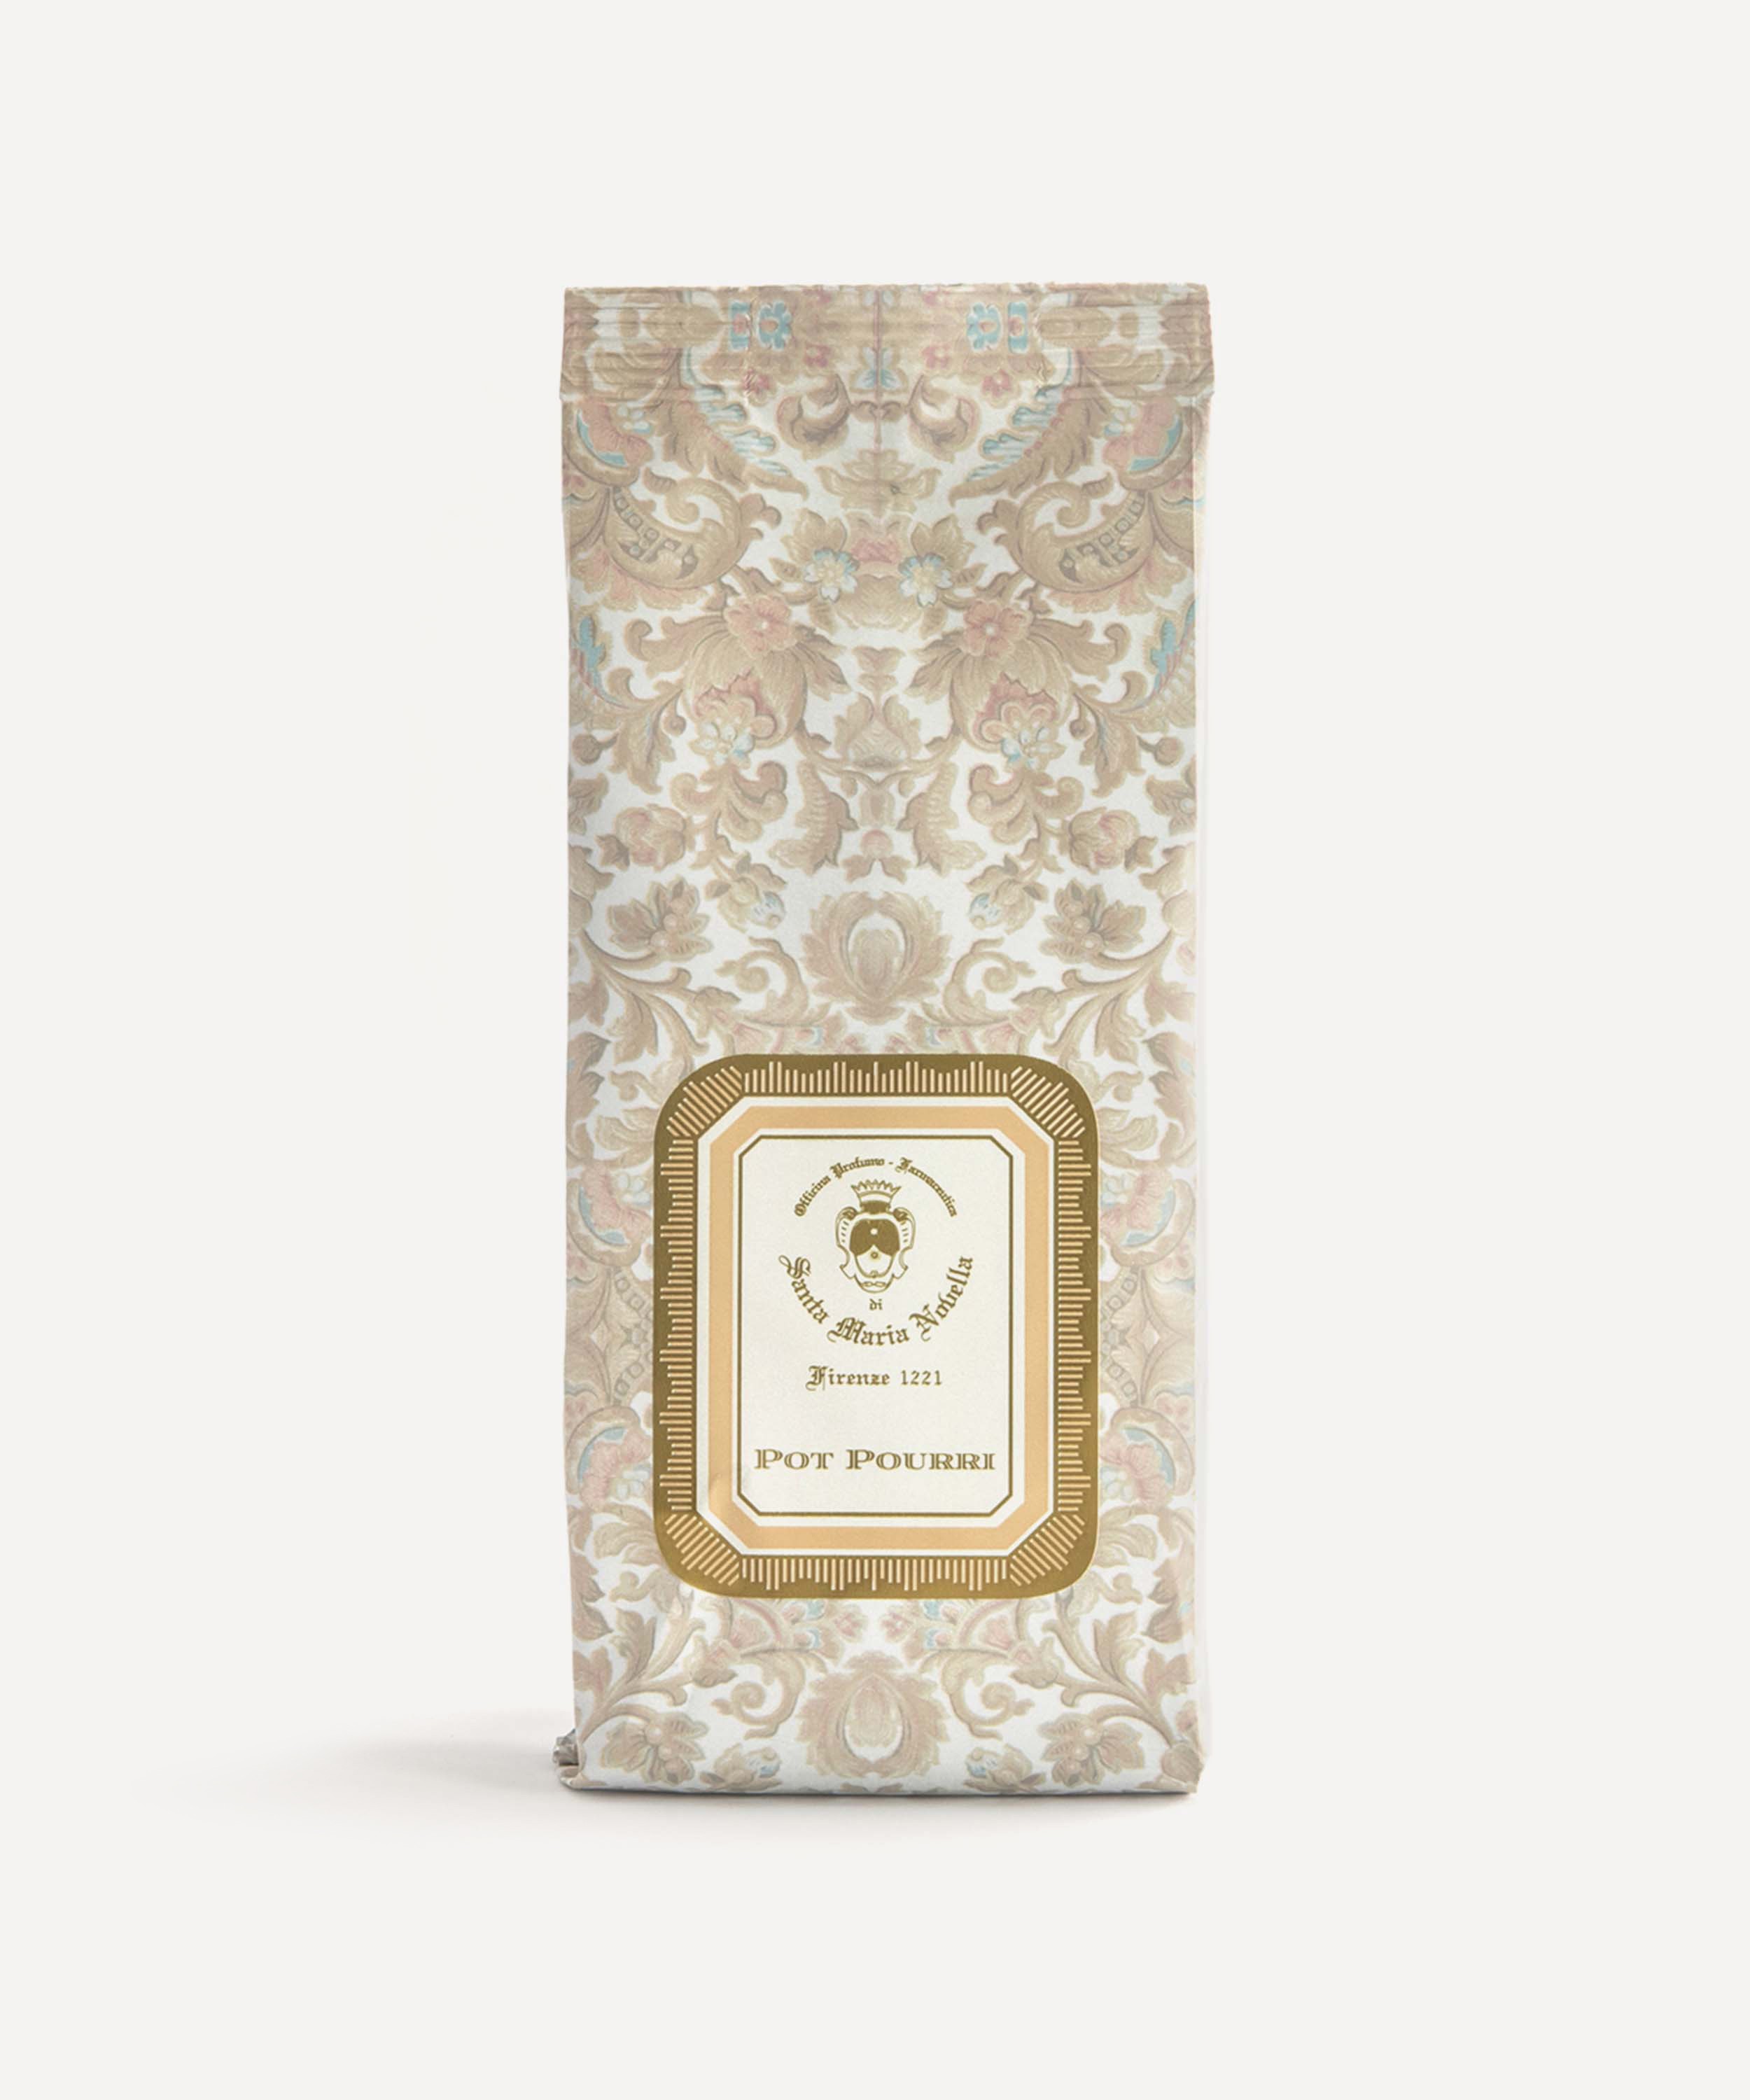 Potpourri Santa Maria Novella perfume - a fragrance for women and men 1828